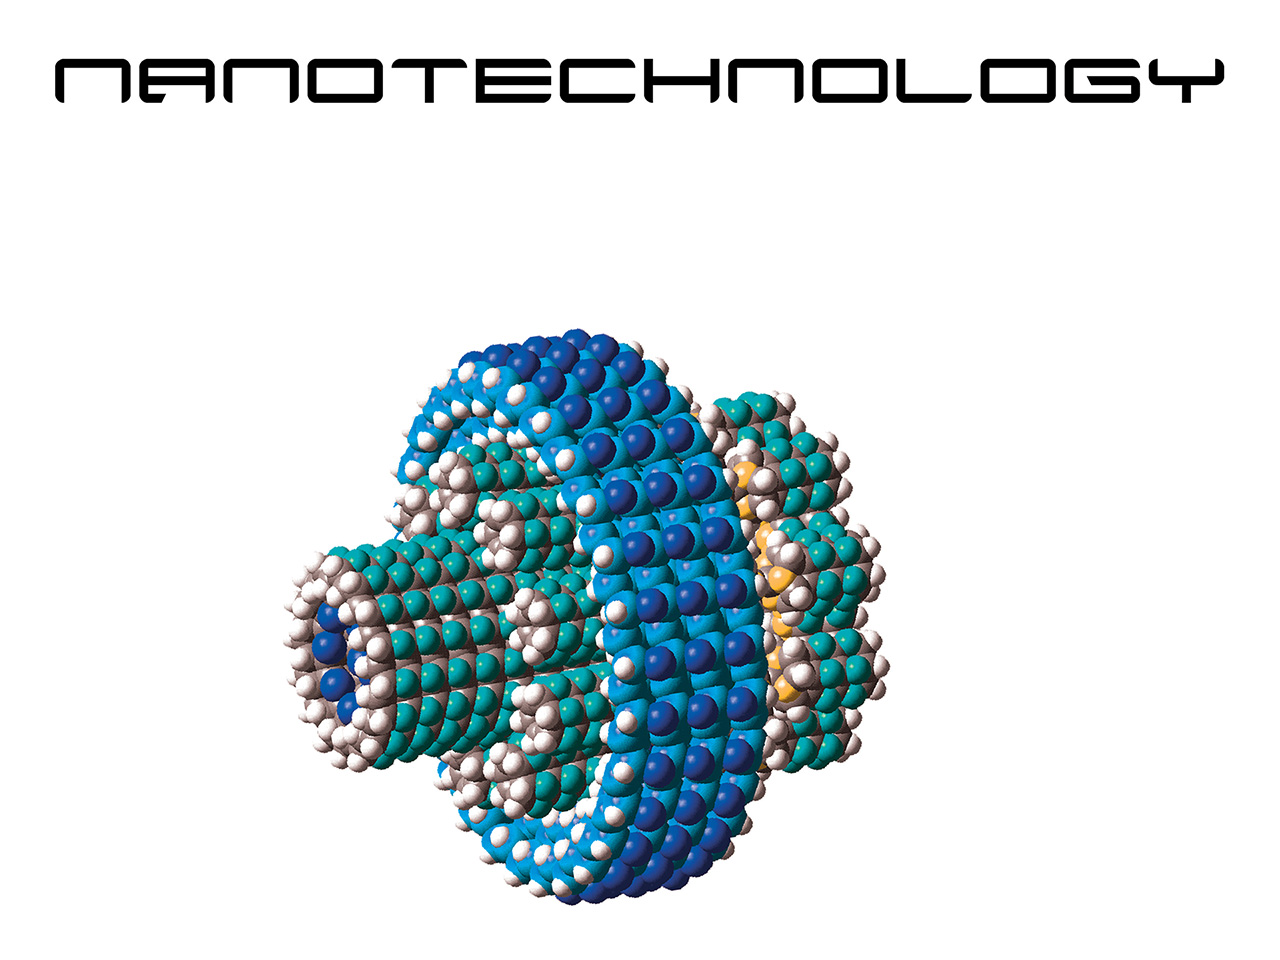 Sistem Cetak Warna dengan NanoTeknologi Mulai Dikembangkan